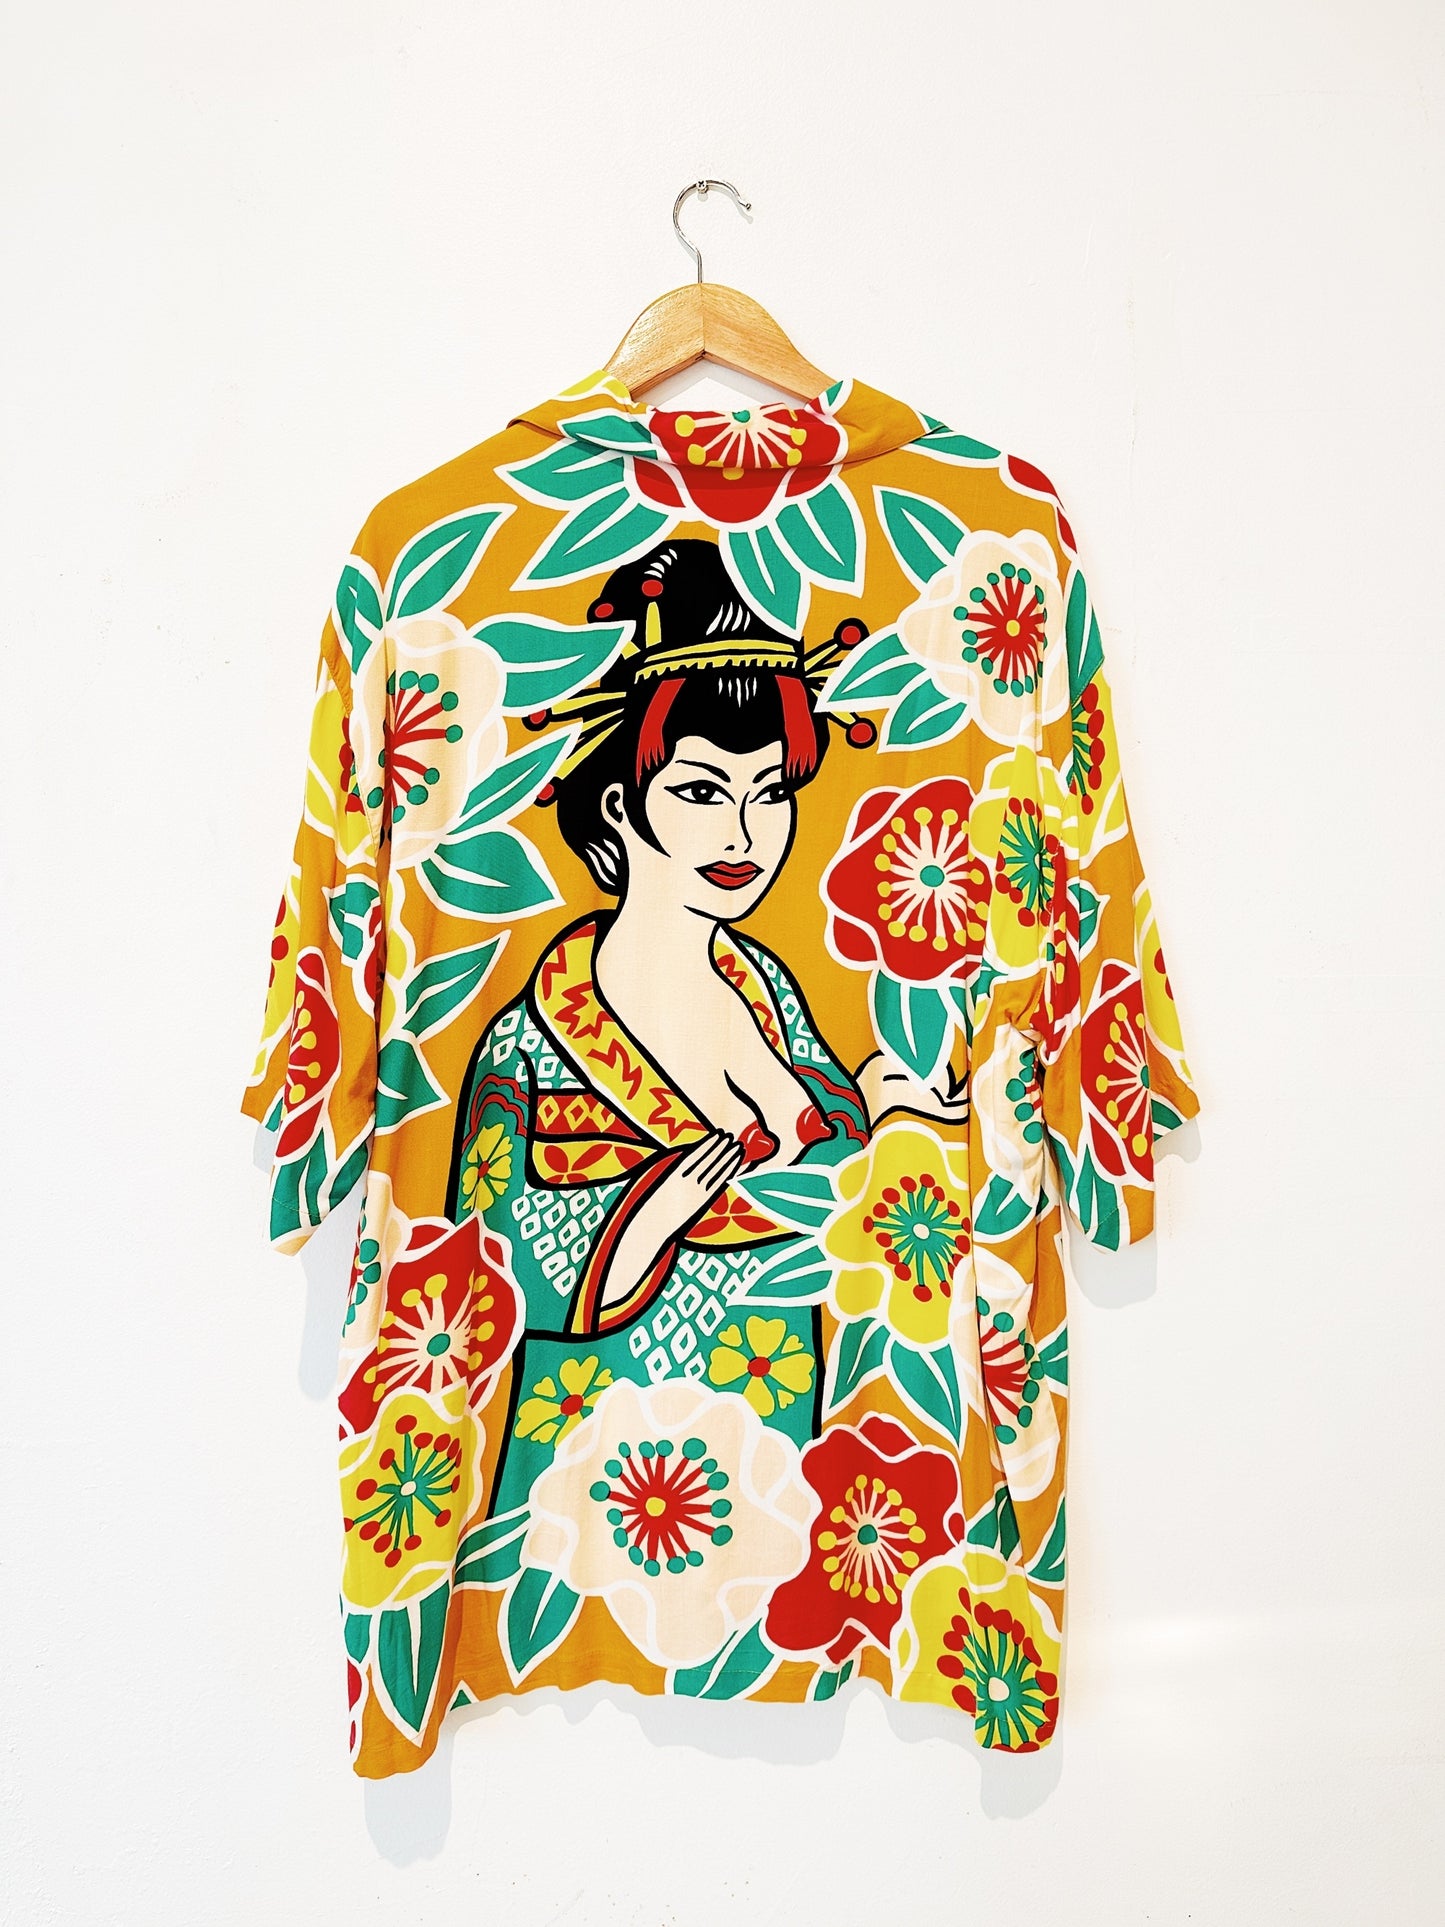 David McKay "Geisha" Vintage Mambo Loud Shirt 68